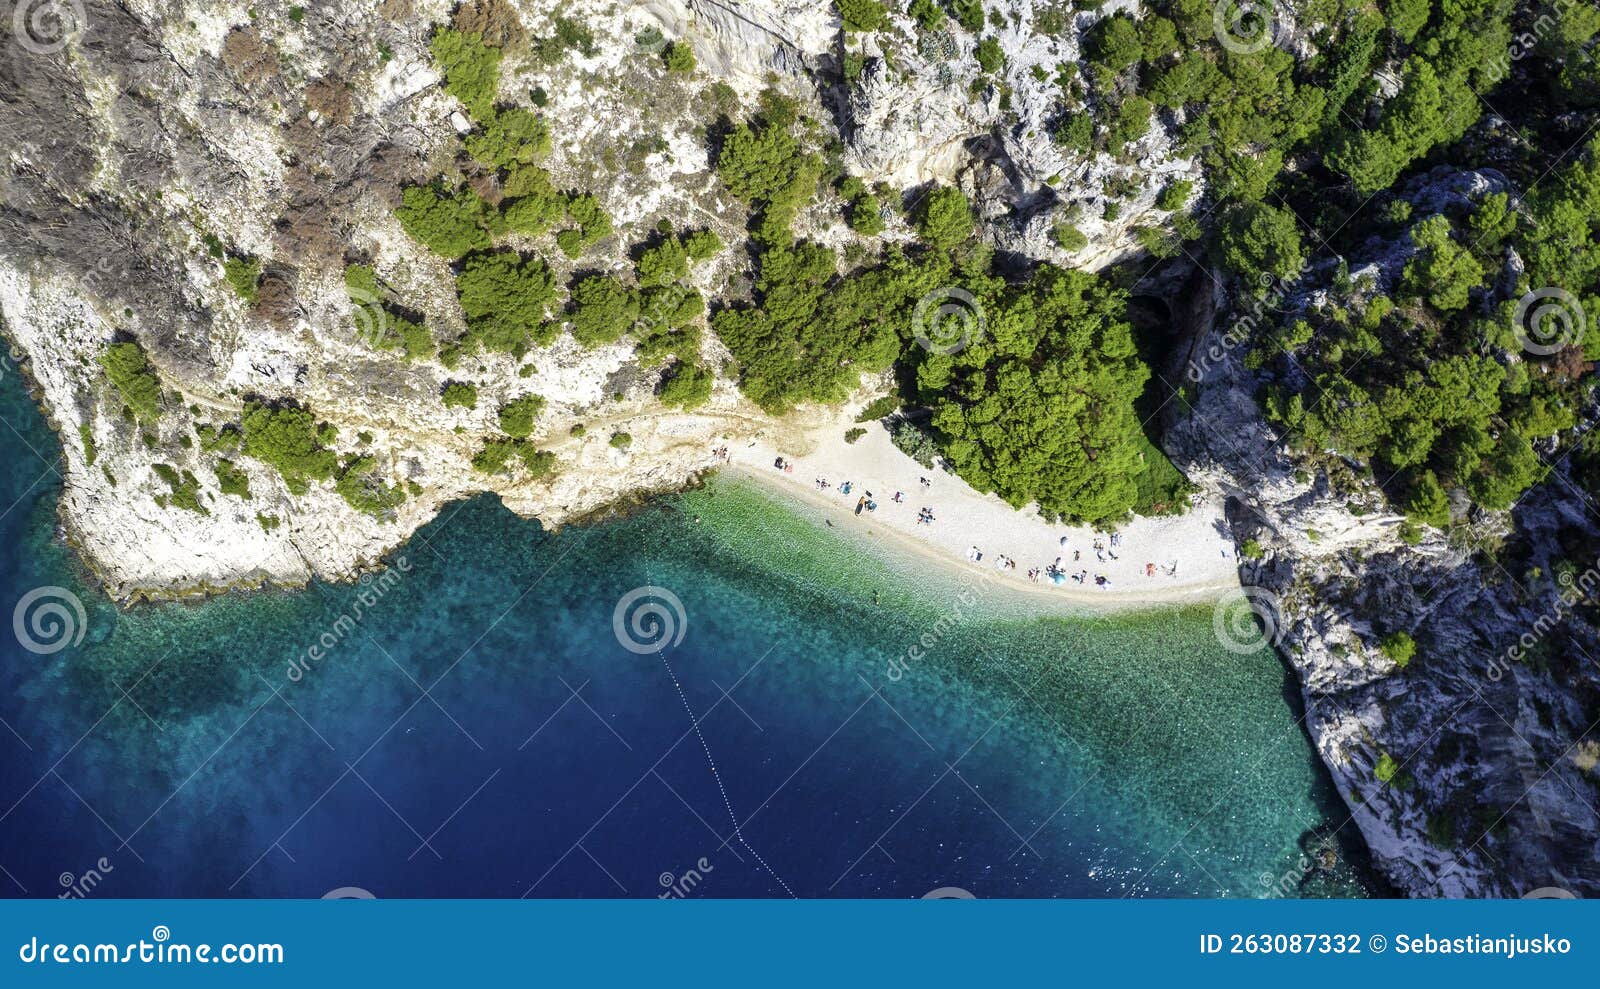 marvelous nugal beach near makarska village, beautiful mediterranean seascape